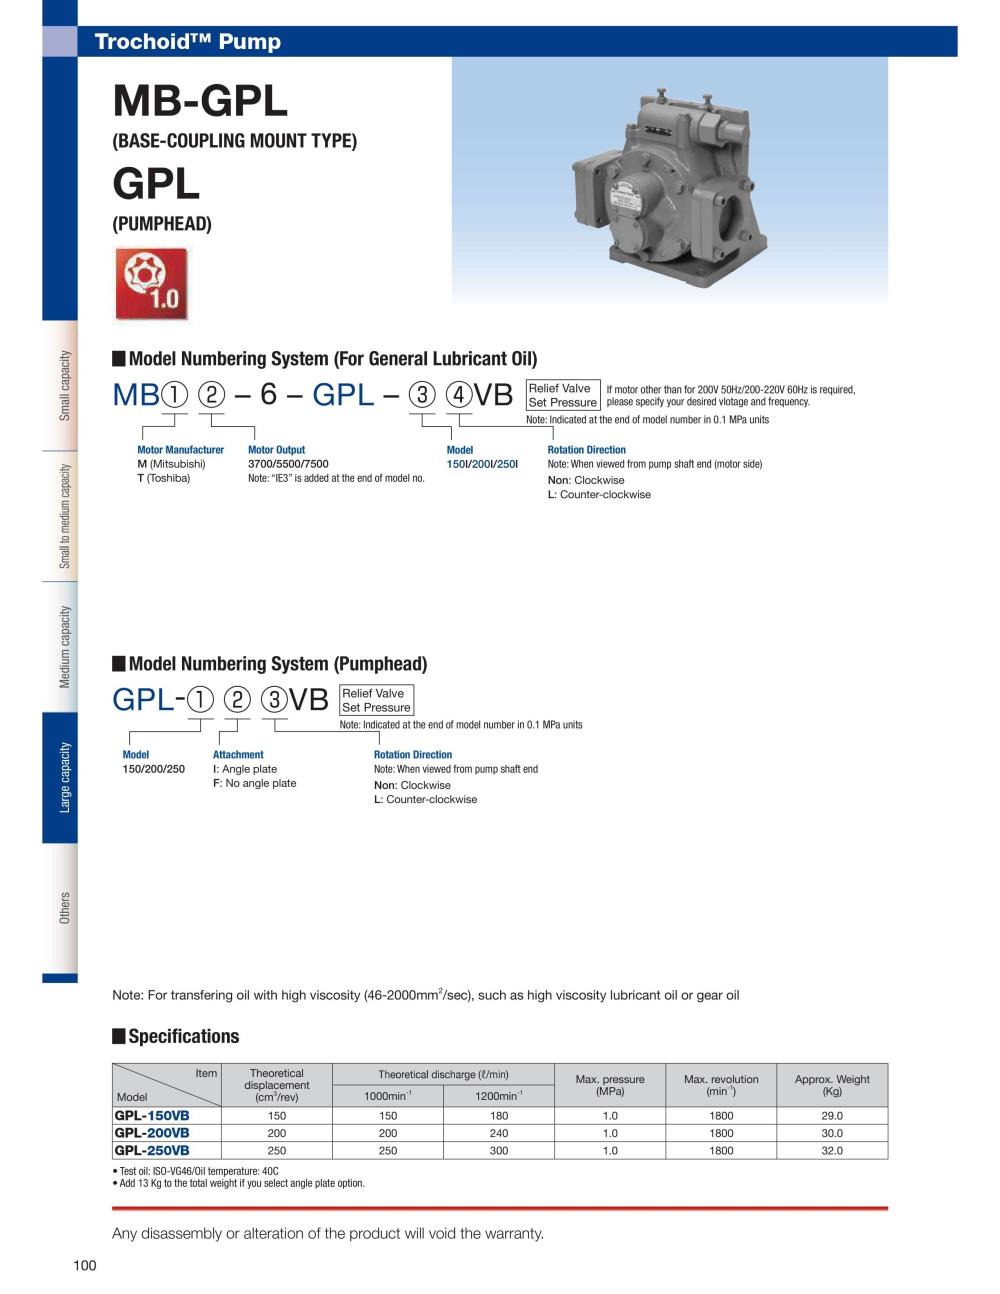 NOP Oil Pump TOP-GPL-ILVB Series